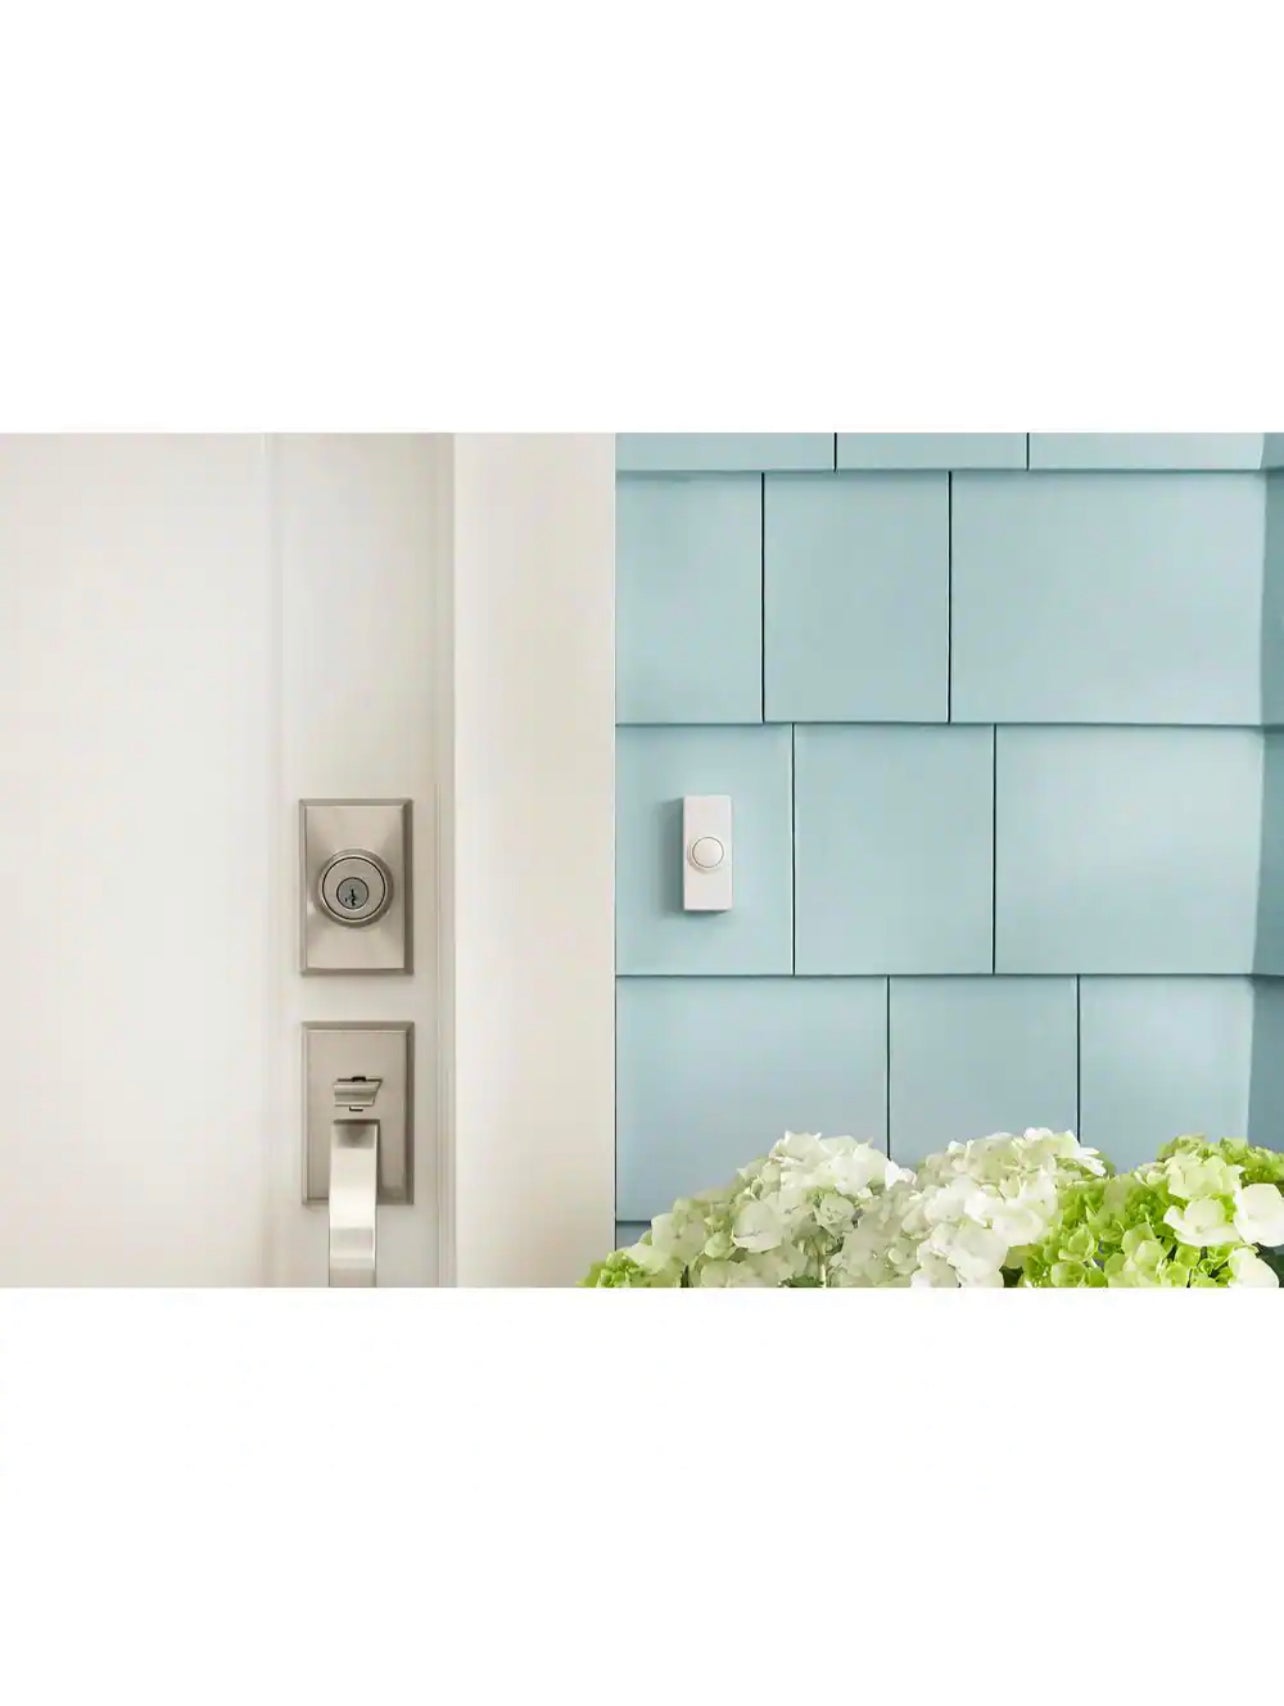 Hampton Bay Wireless Plug-In Doorbell Kit with 2 Wireless Push Buttons, White Damaged Box